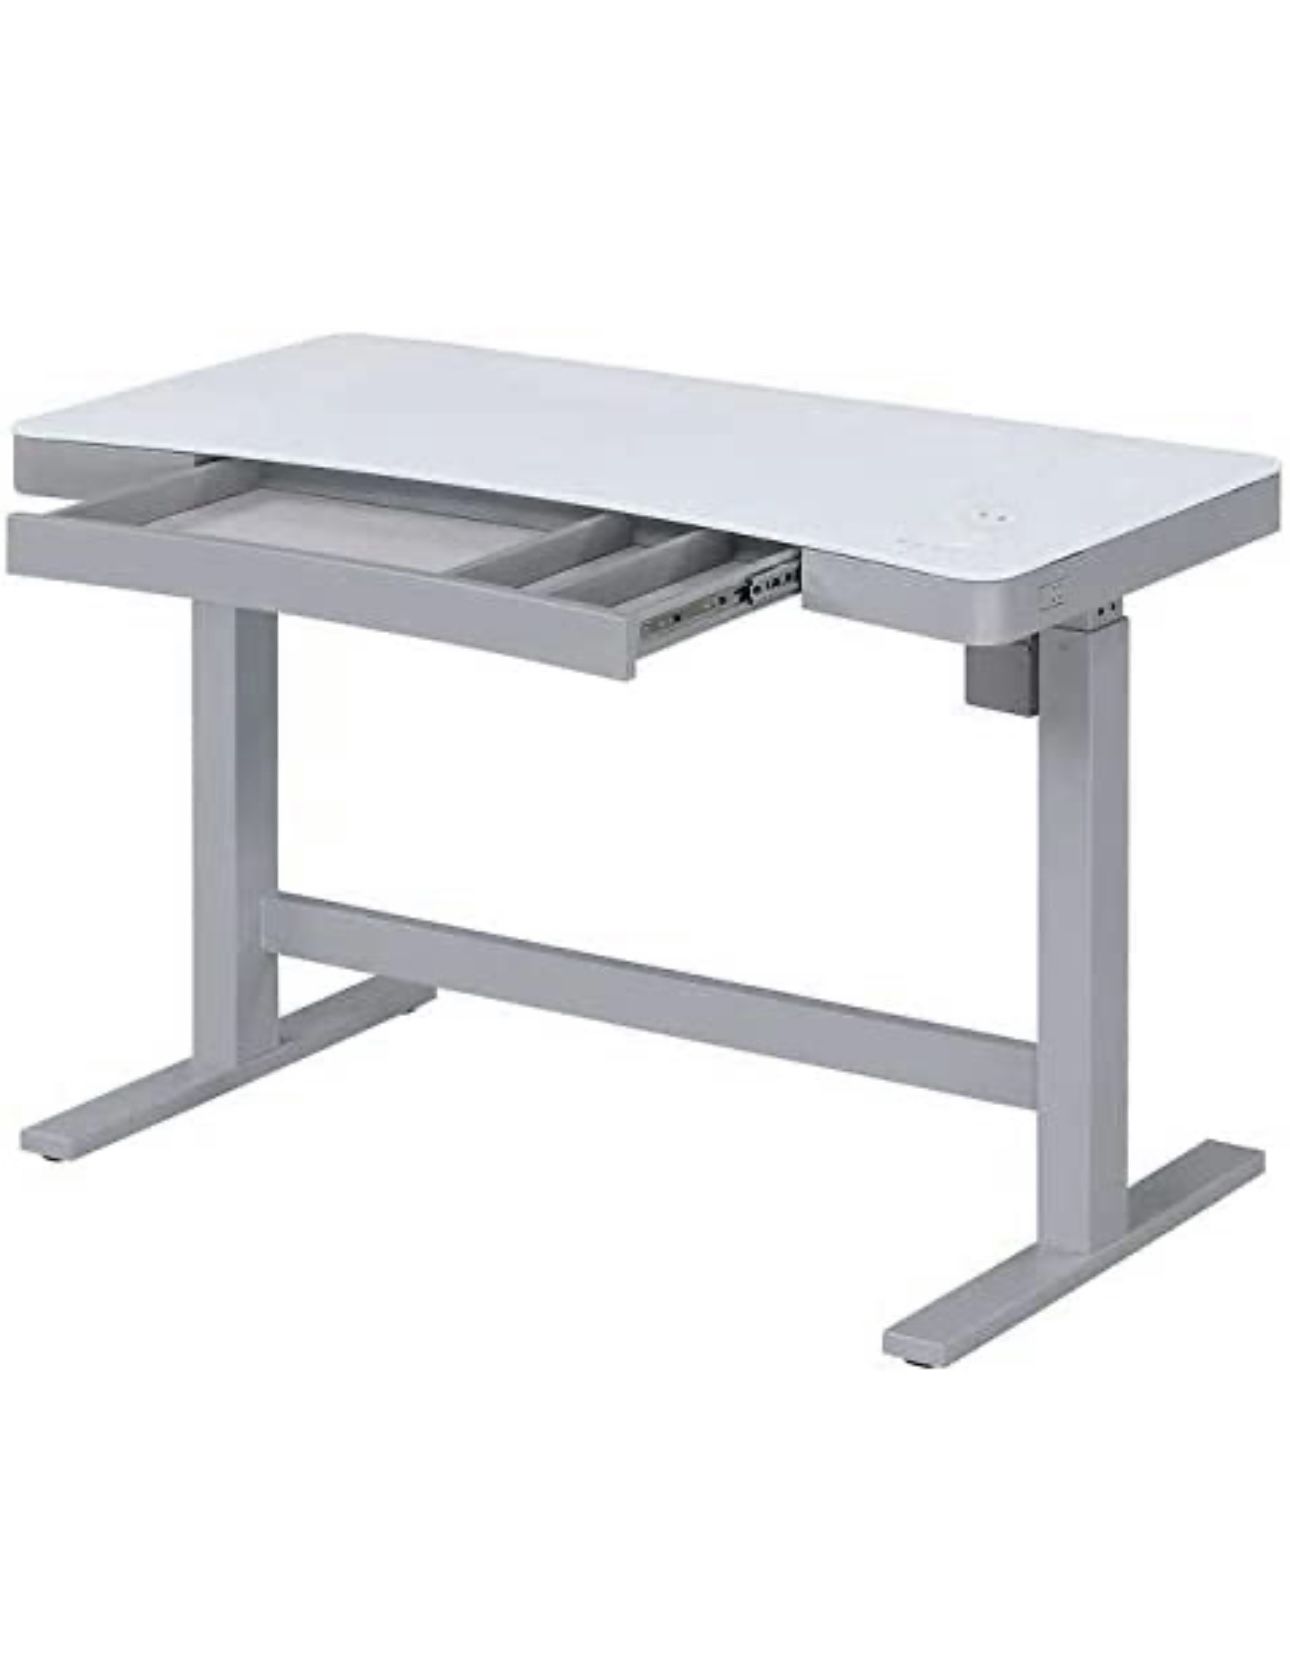 Adjustable height Desk